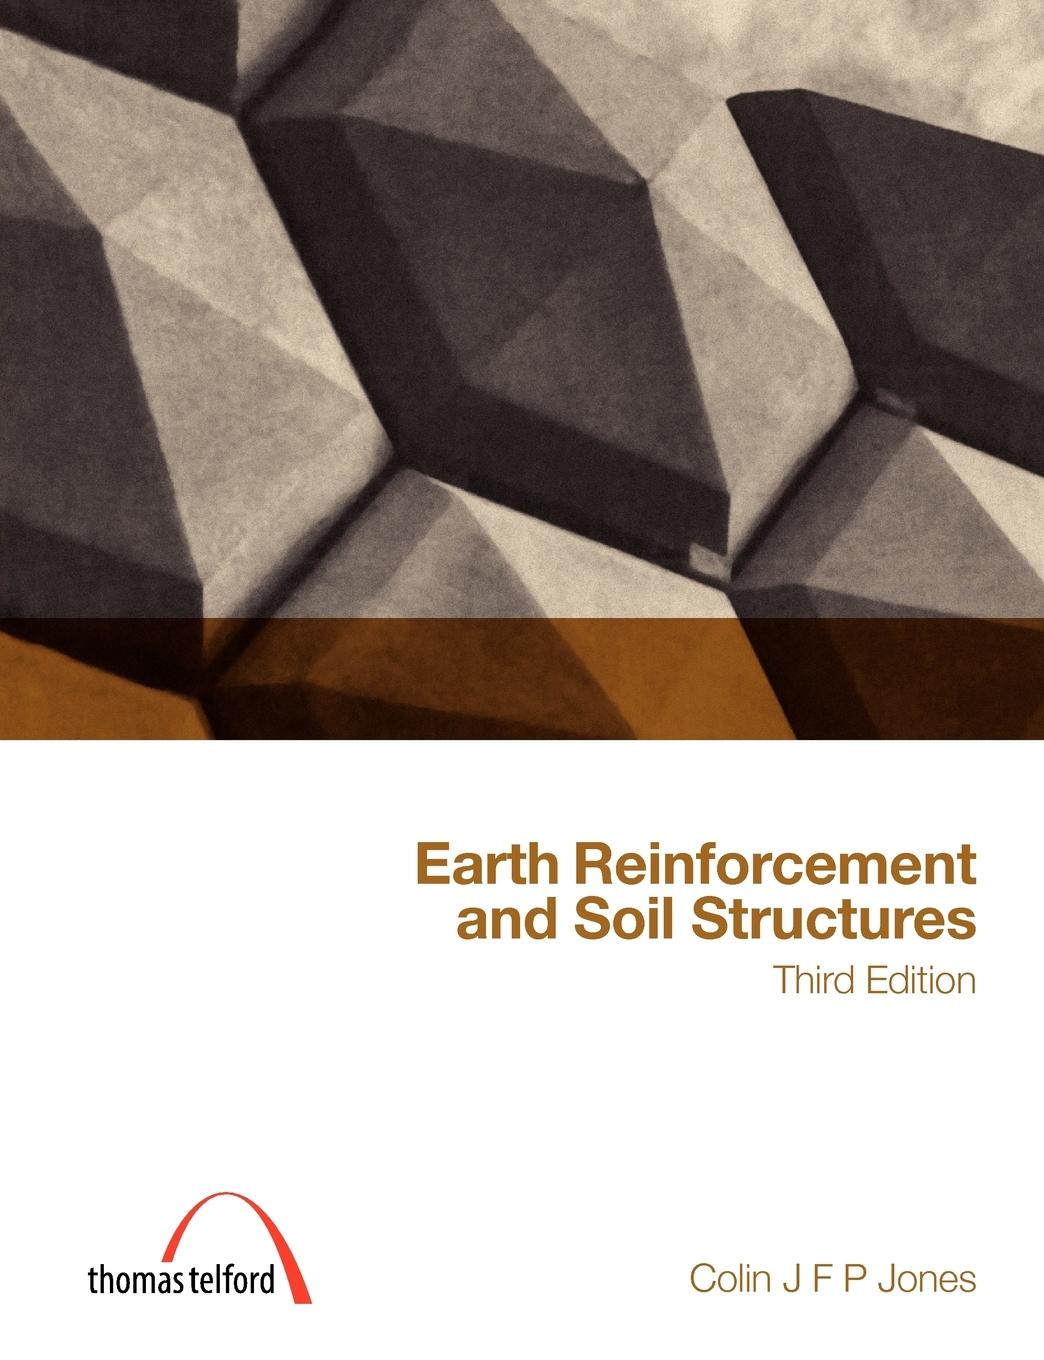 Earth Reinforcement & Soil Structures - Jones, Colin Jfp